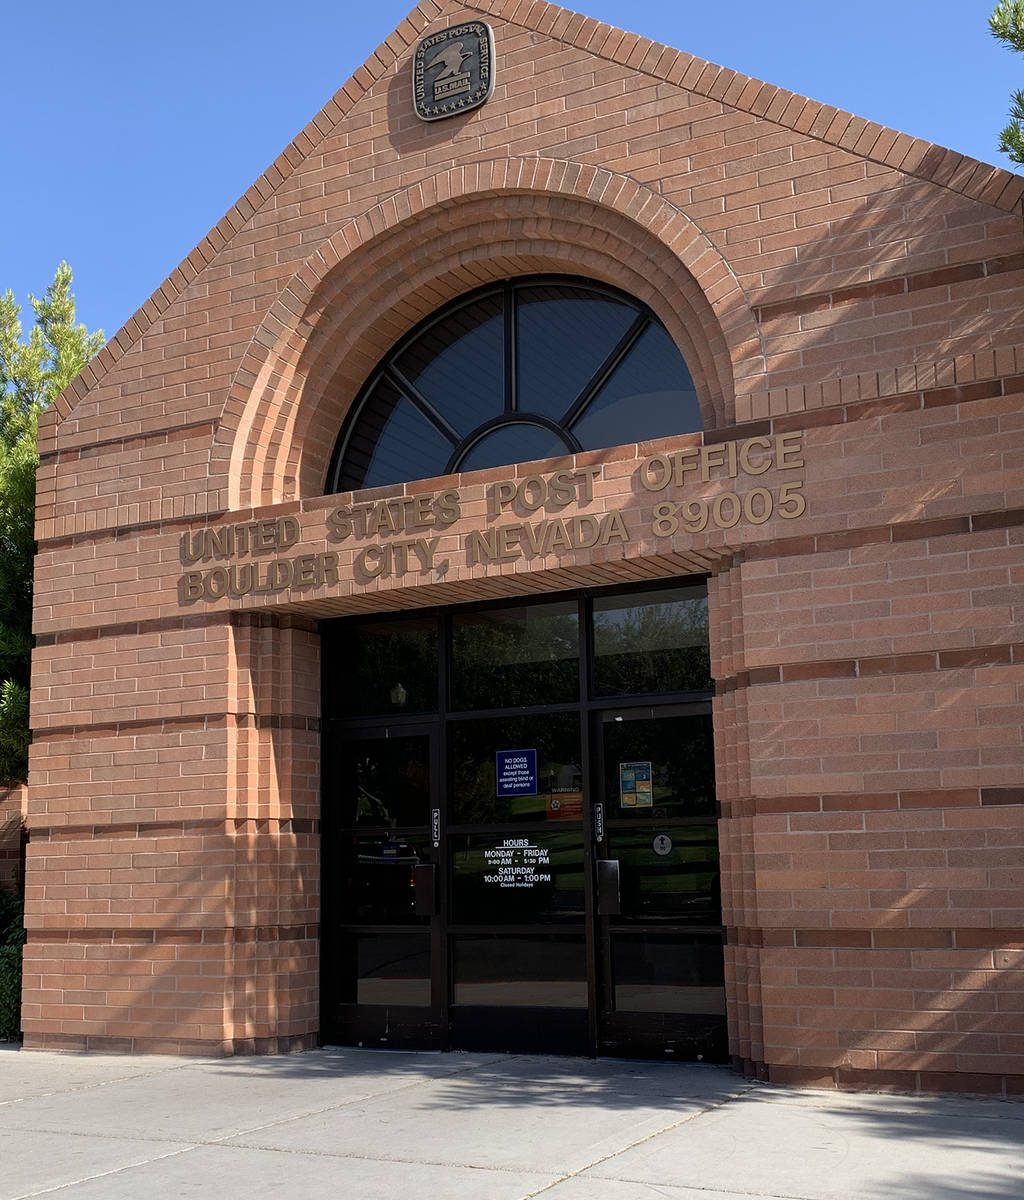 (Hali Bernstein Saylor/Boulder City Review) United States Postal Service officials have determi ...